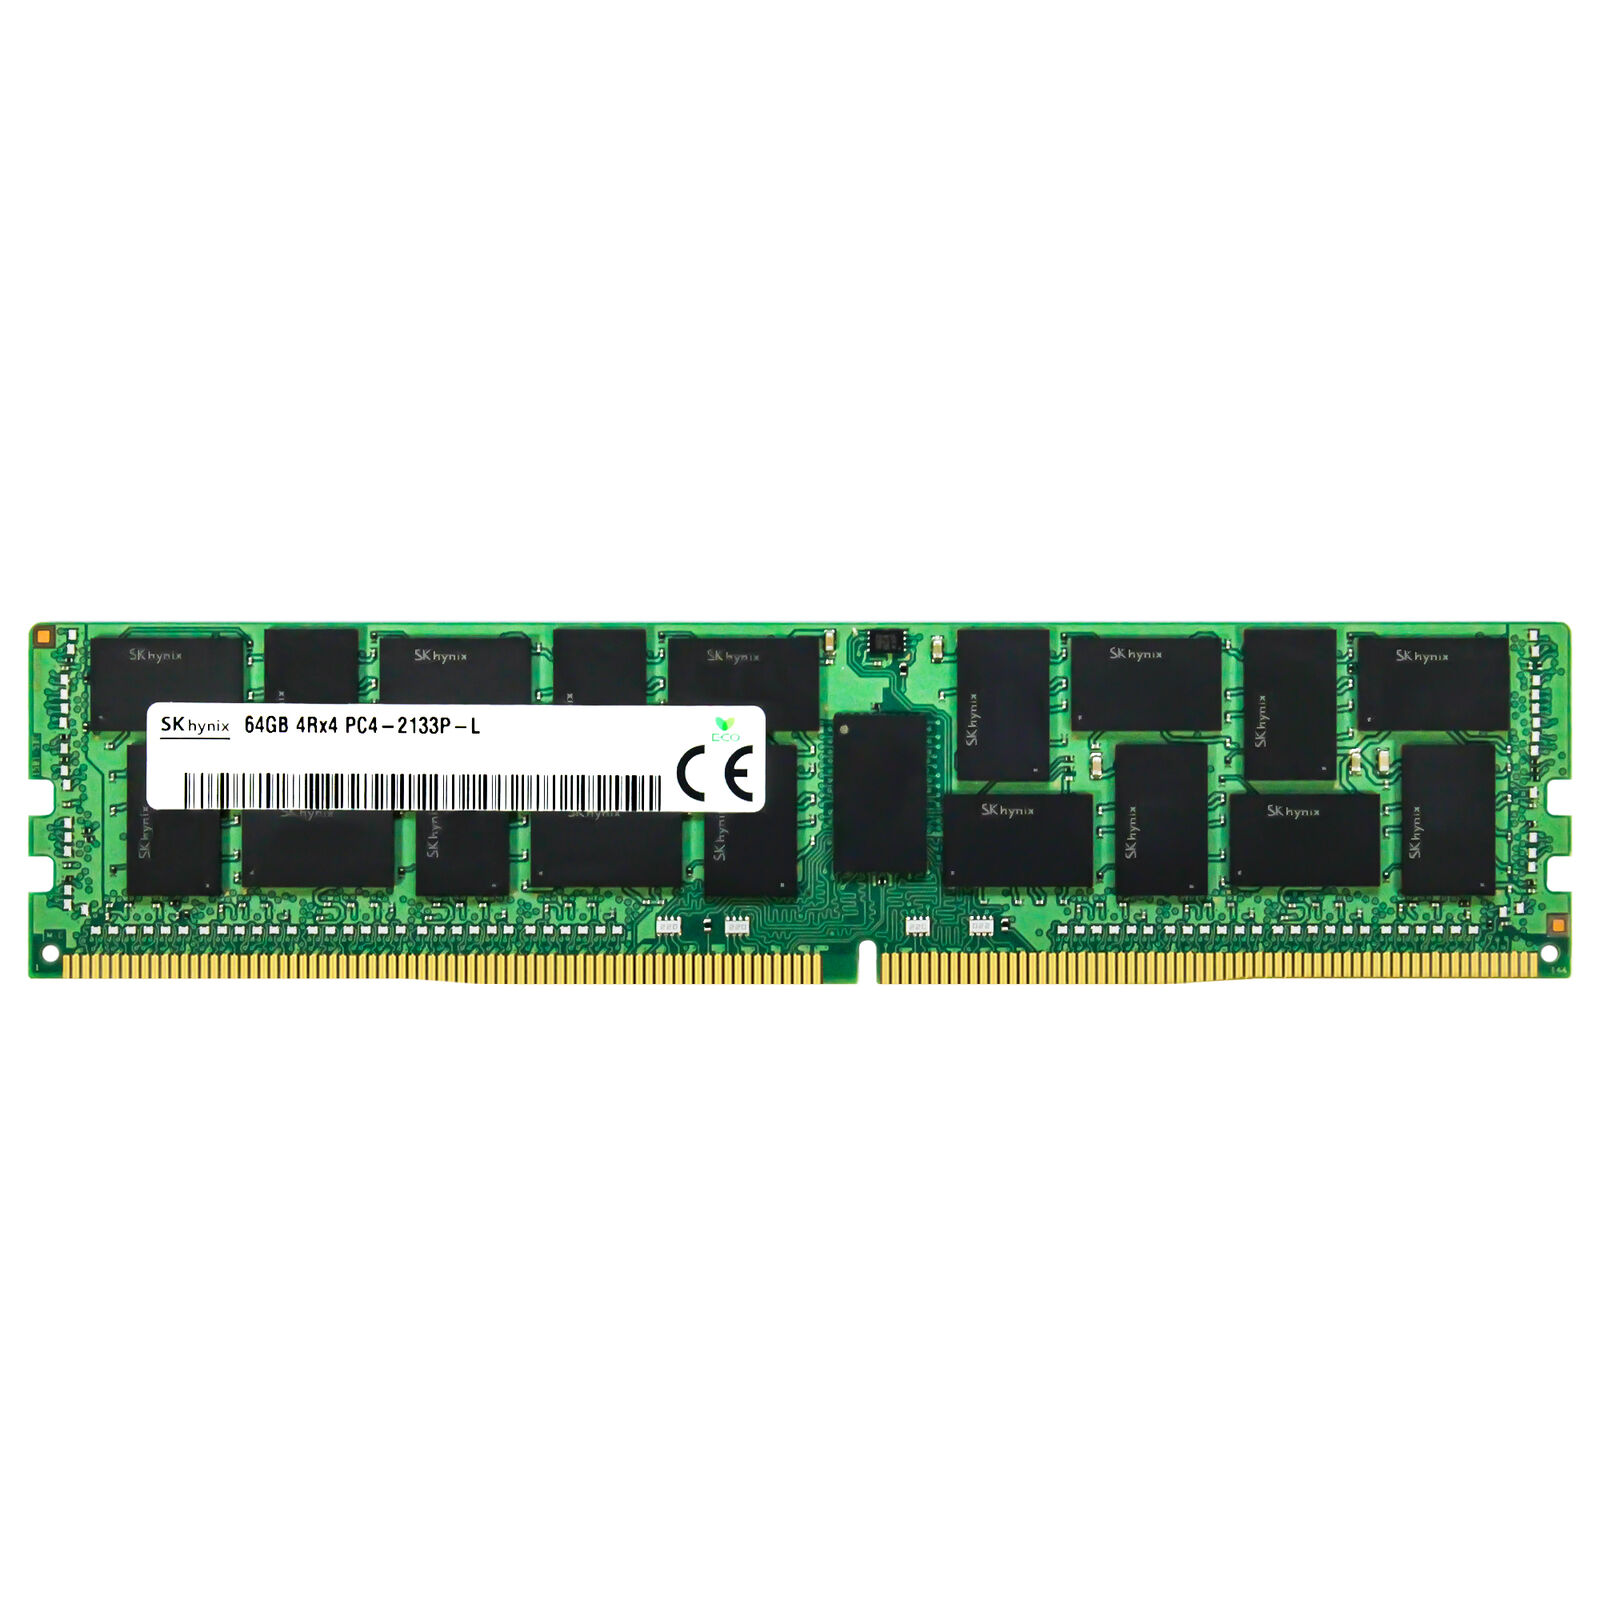 Hynix 64GB 4Rx4 PC4-2133P-L LRDIMM DDR4-17000 ECC Load Reduced Server Memory RAM